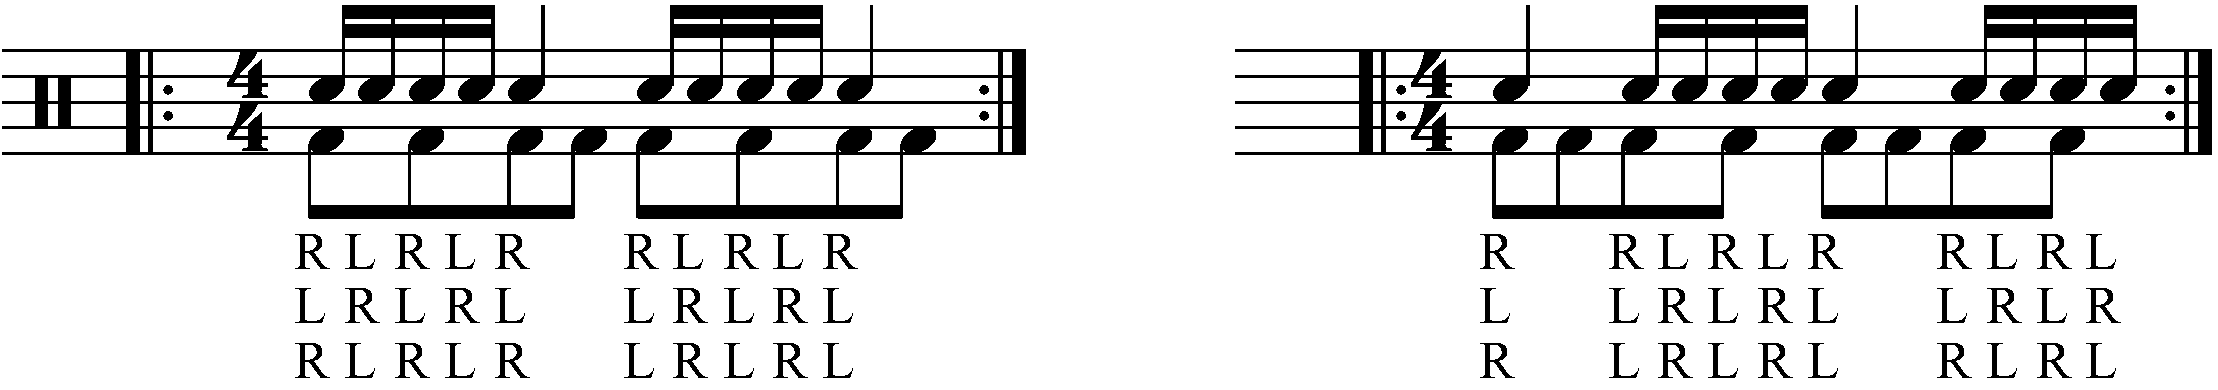 Adding eighth note feet under a single stroke 5